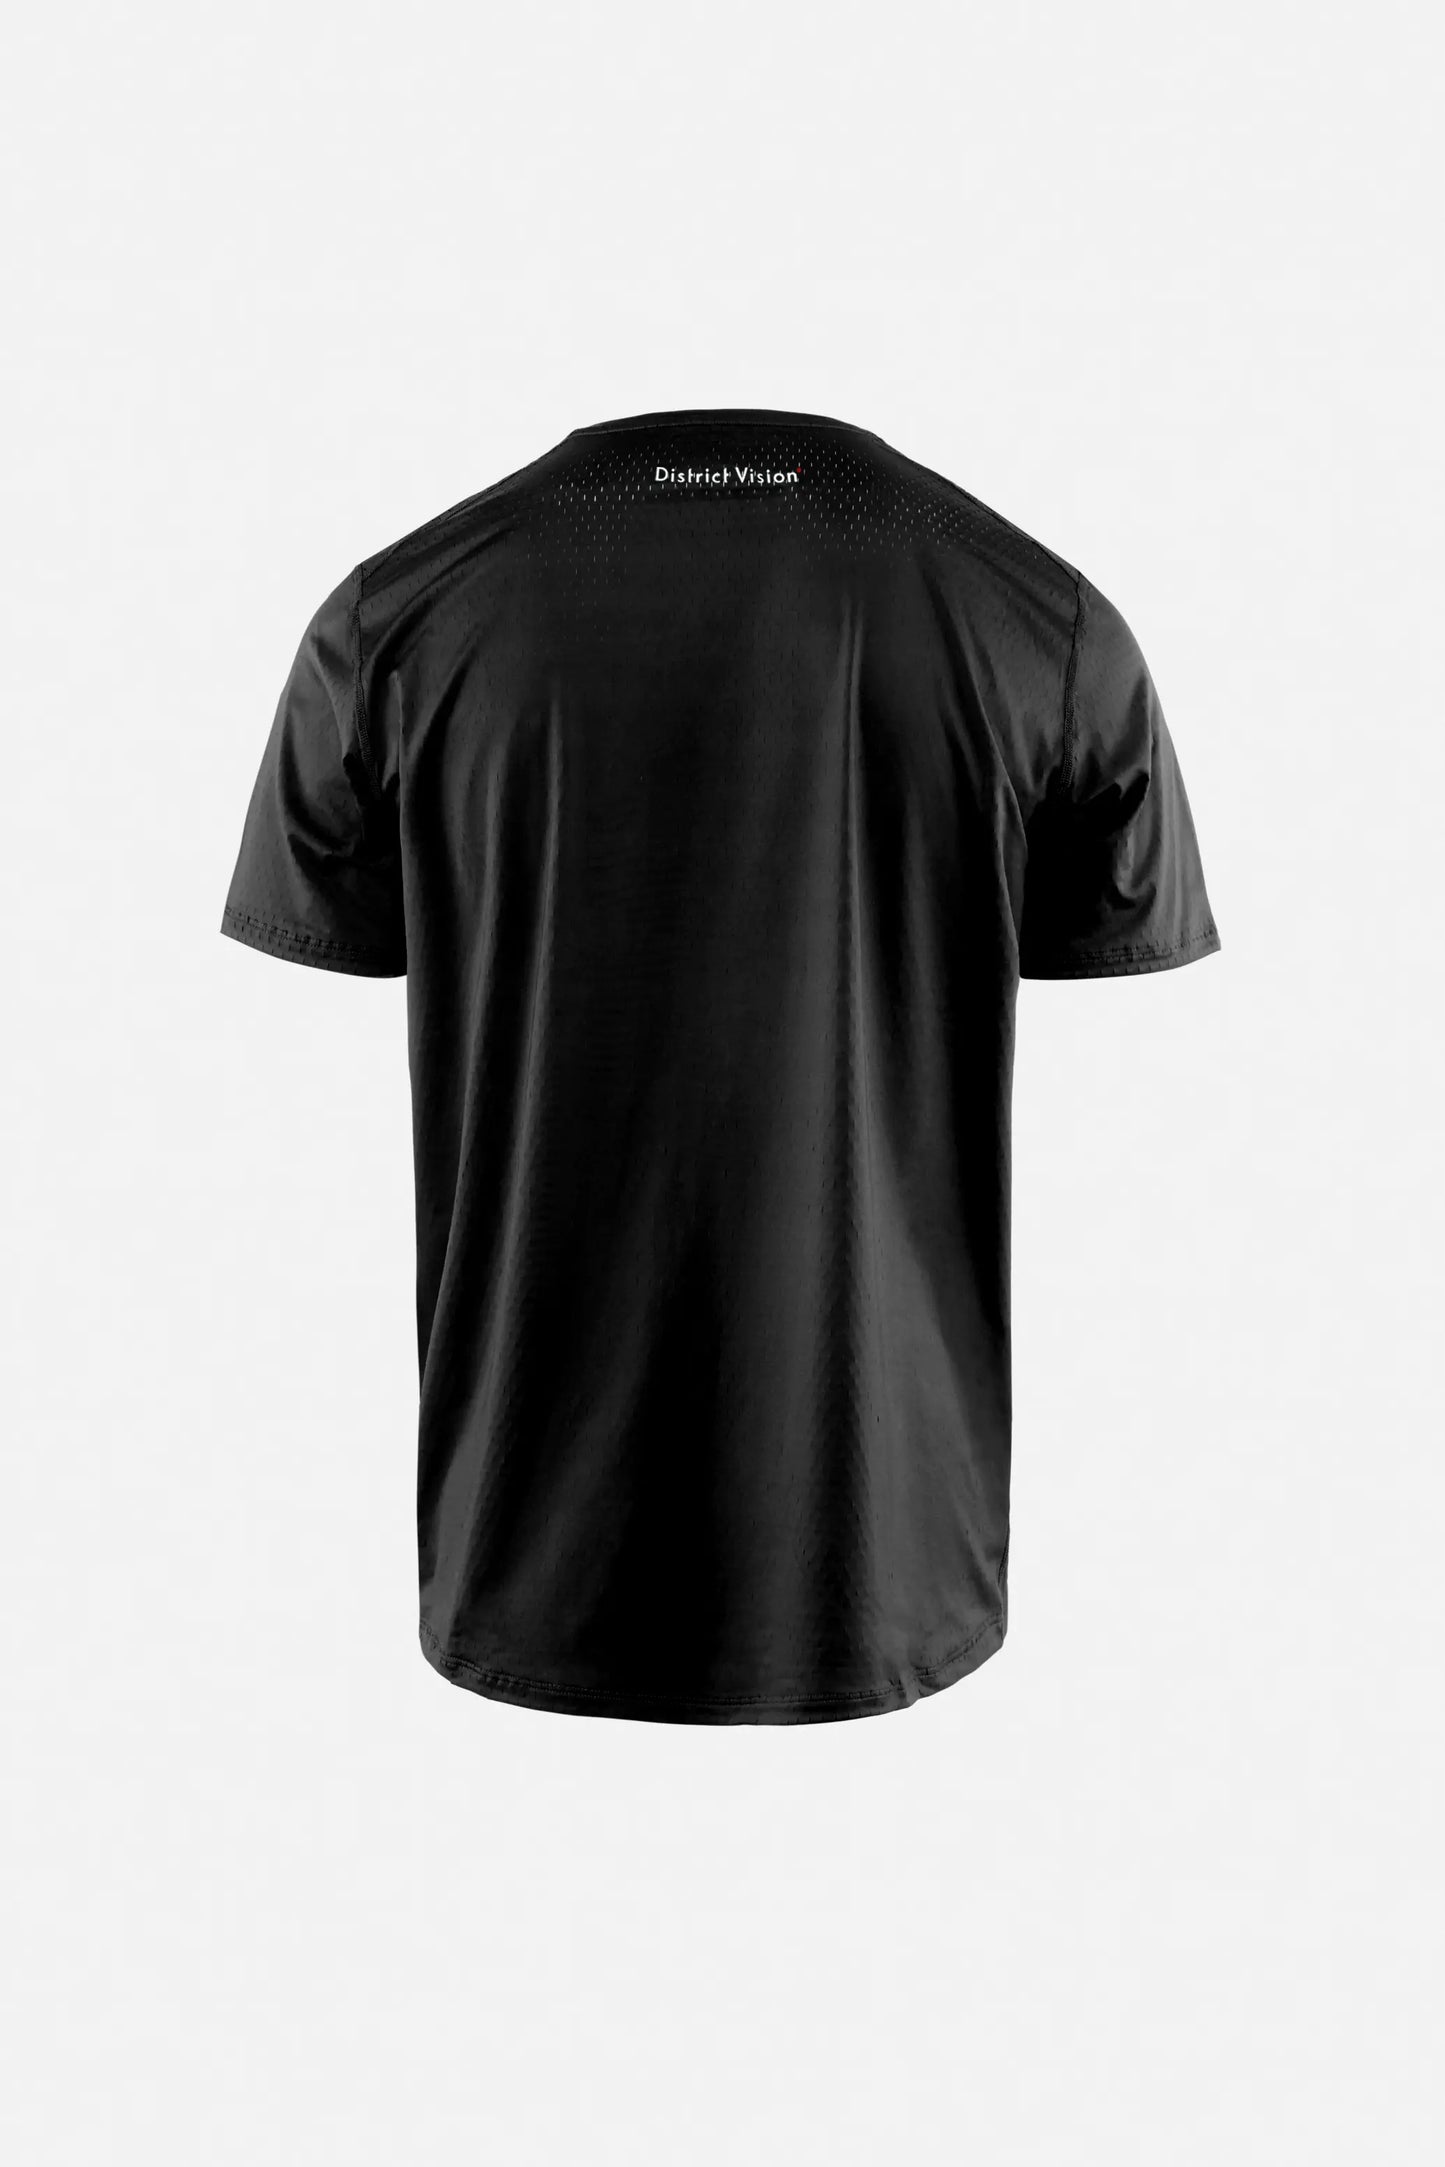 District Vision Air-Wear Short Sleeve T-Shirt in Black